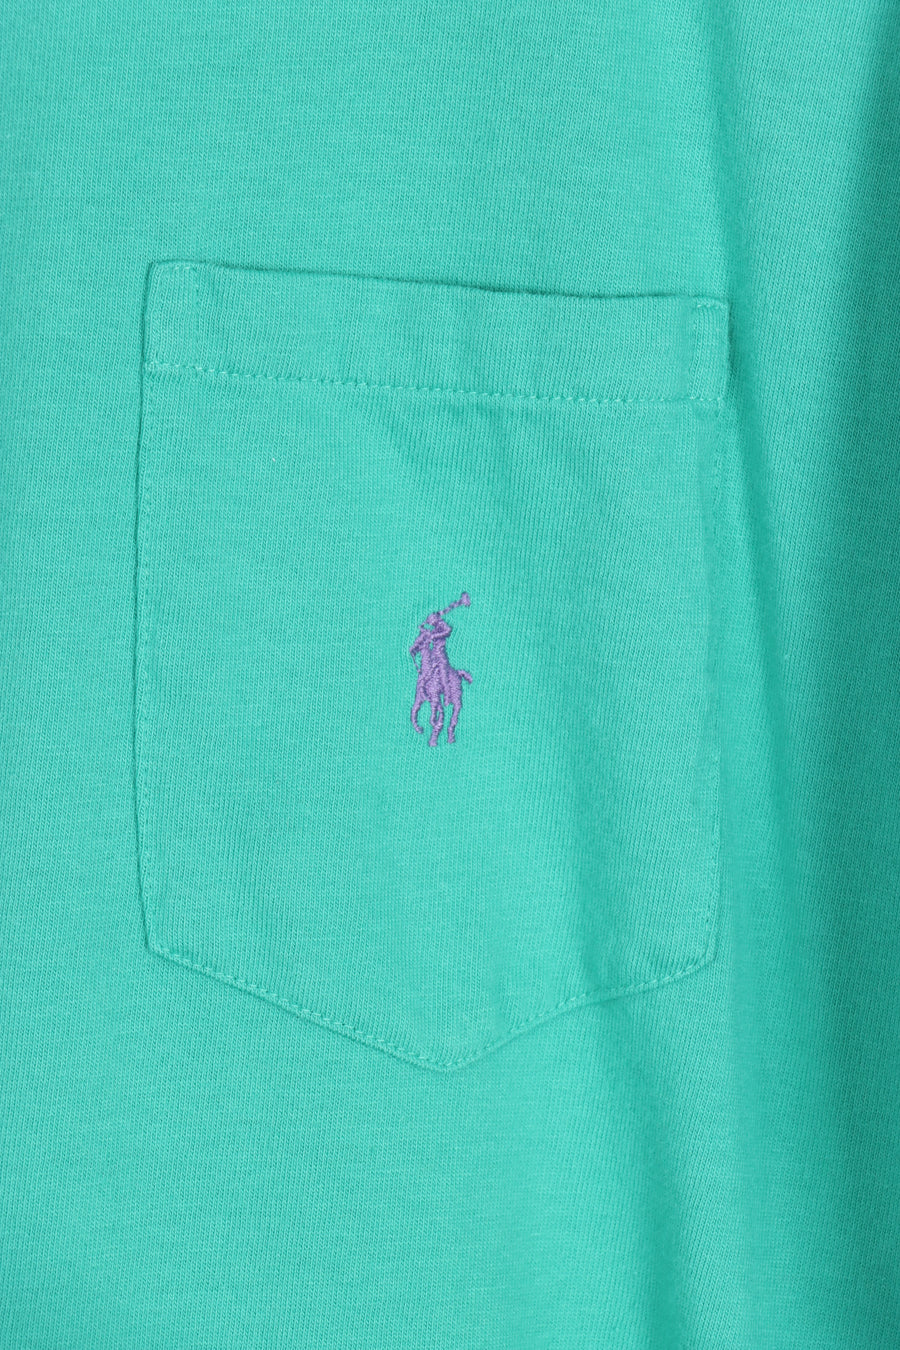 POLO RALPH LAUREN Green & Purple Embroidered Pocket Single Stich Tee (XXL)